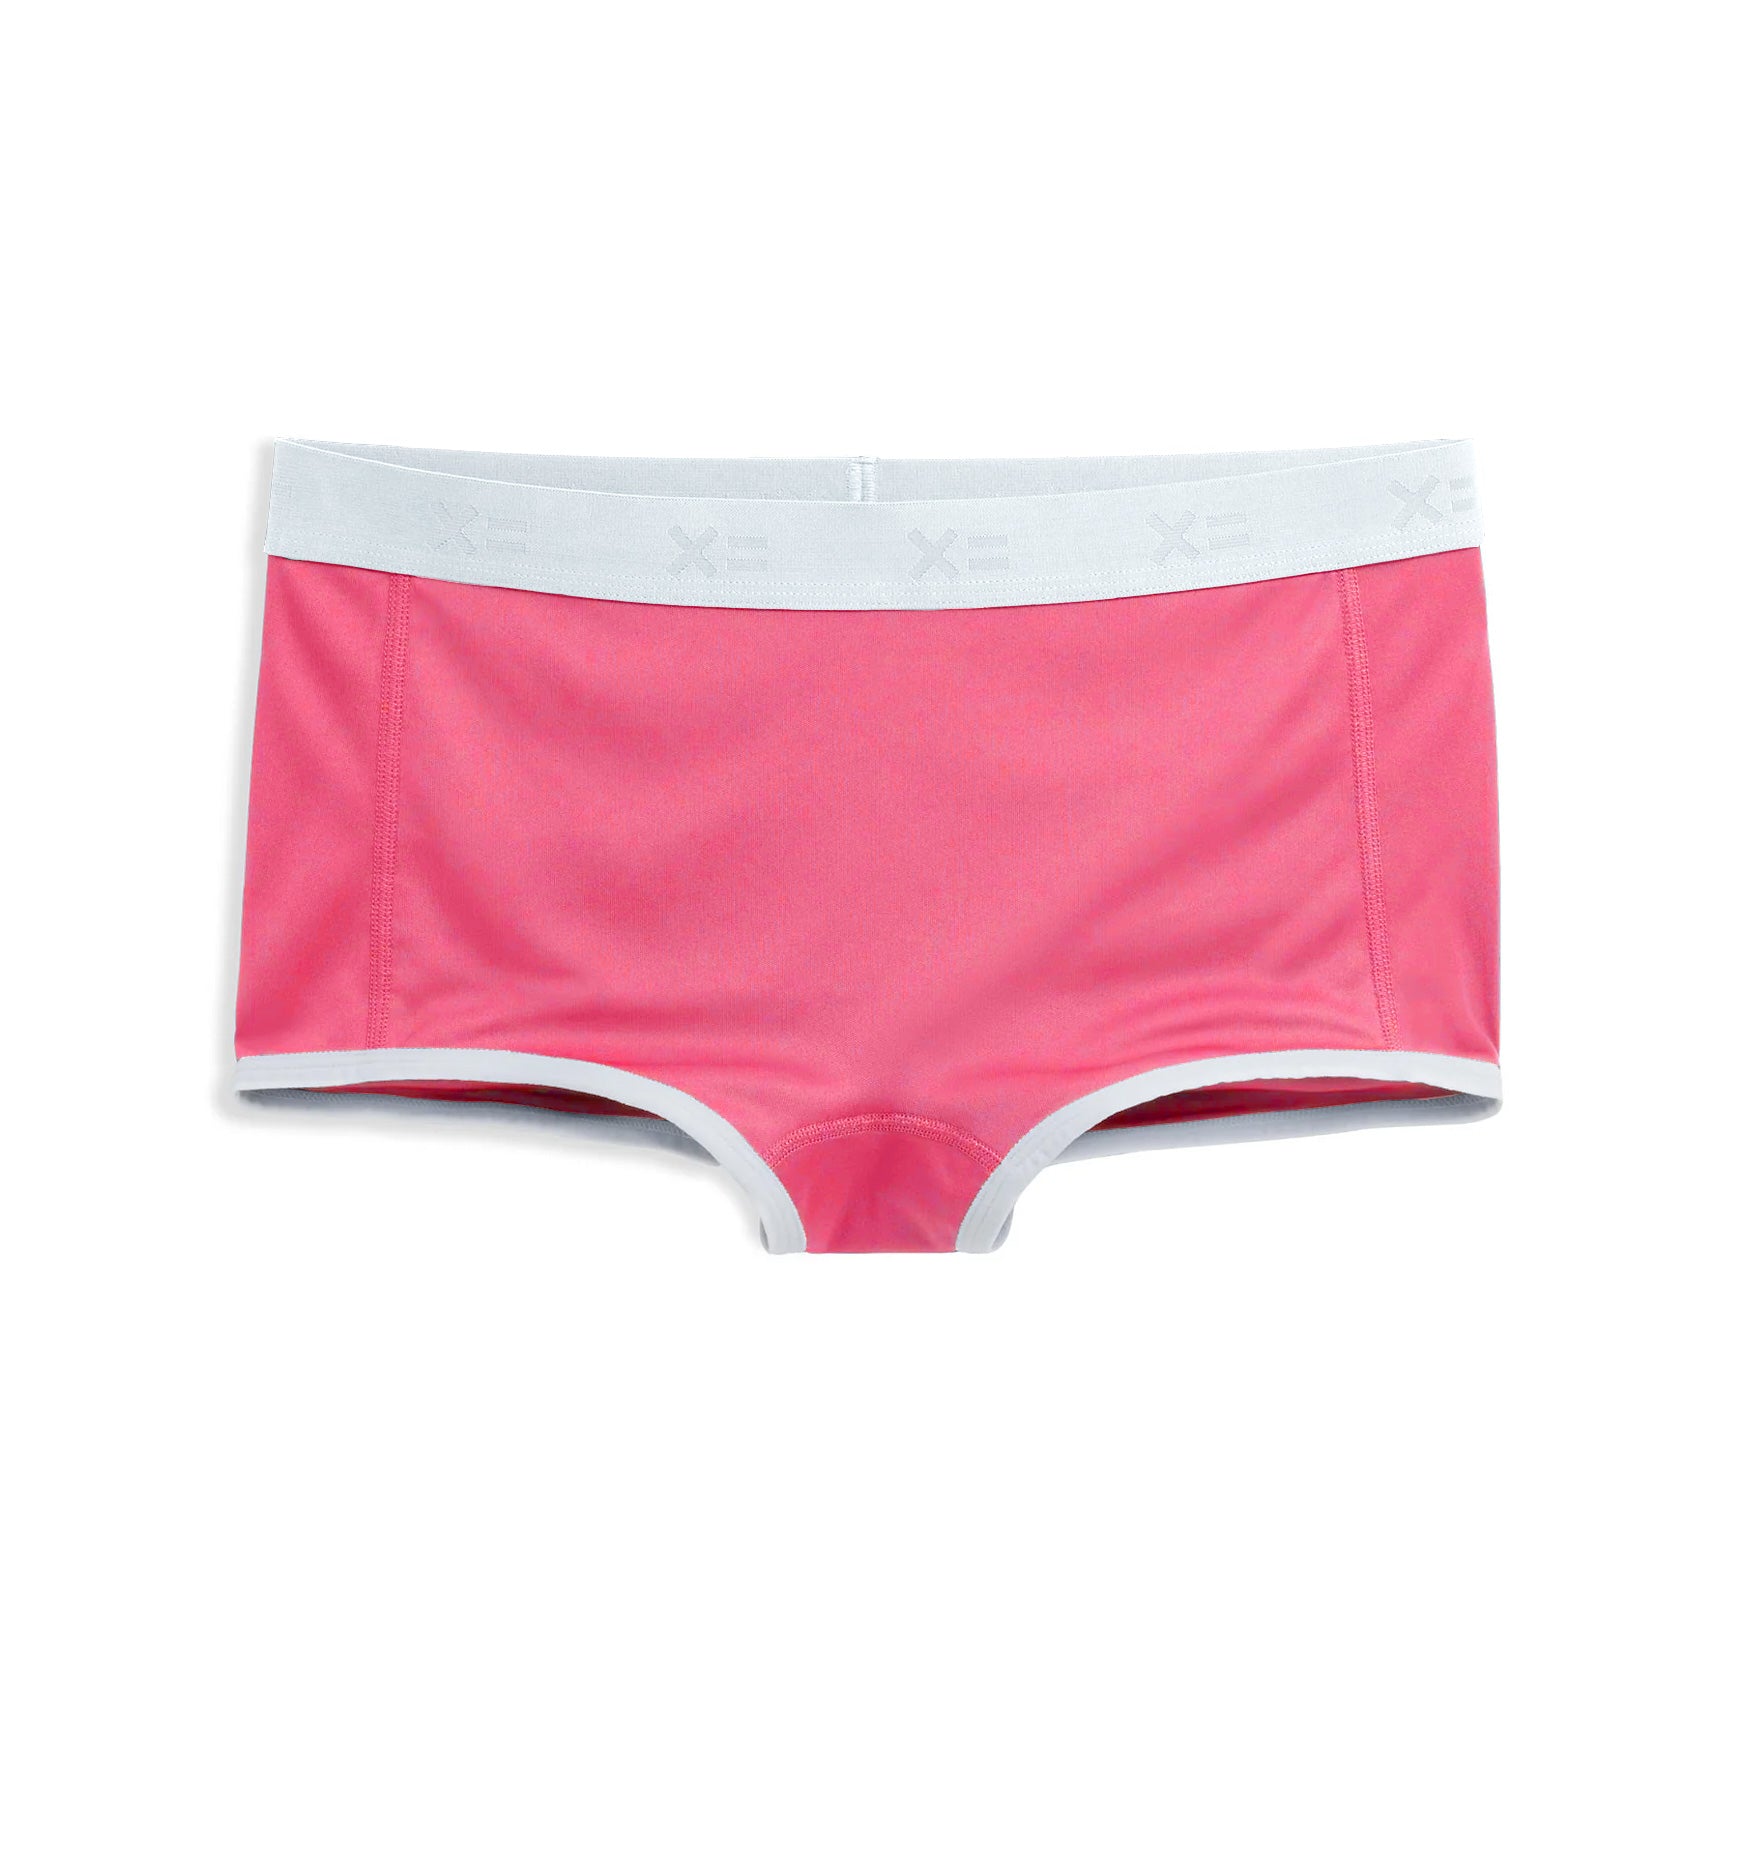 Tucking Boy Shorts - Hyper Pink